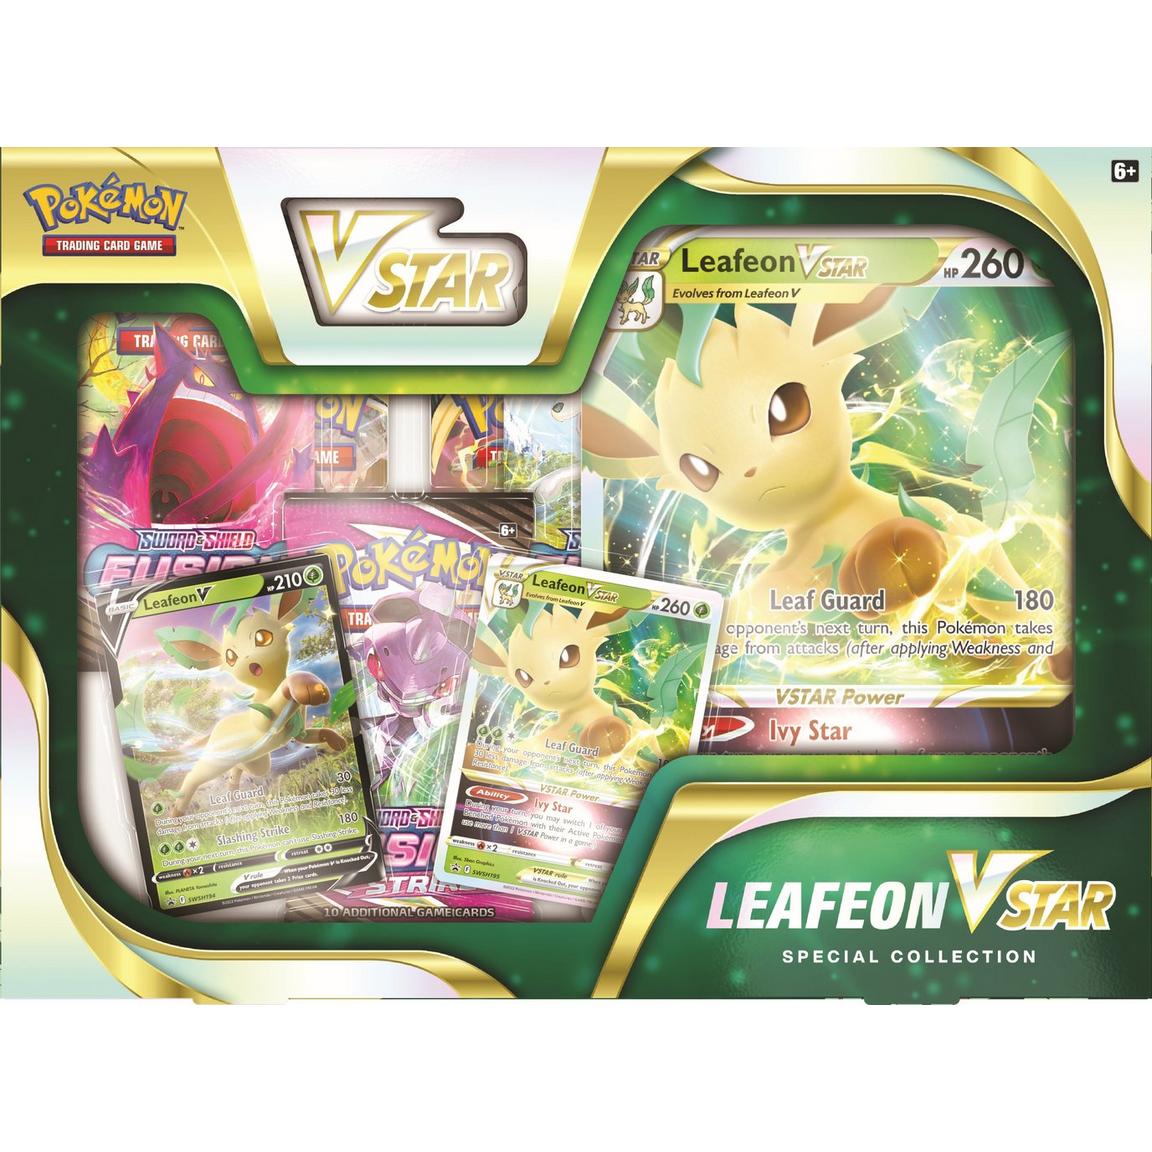 Pokemon VSTAR Special Collection Box (Leafeon V-Star & Glaceon V-Star) - Brilliant Stars